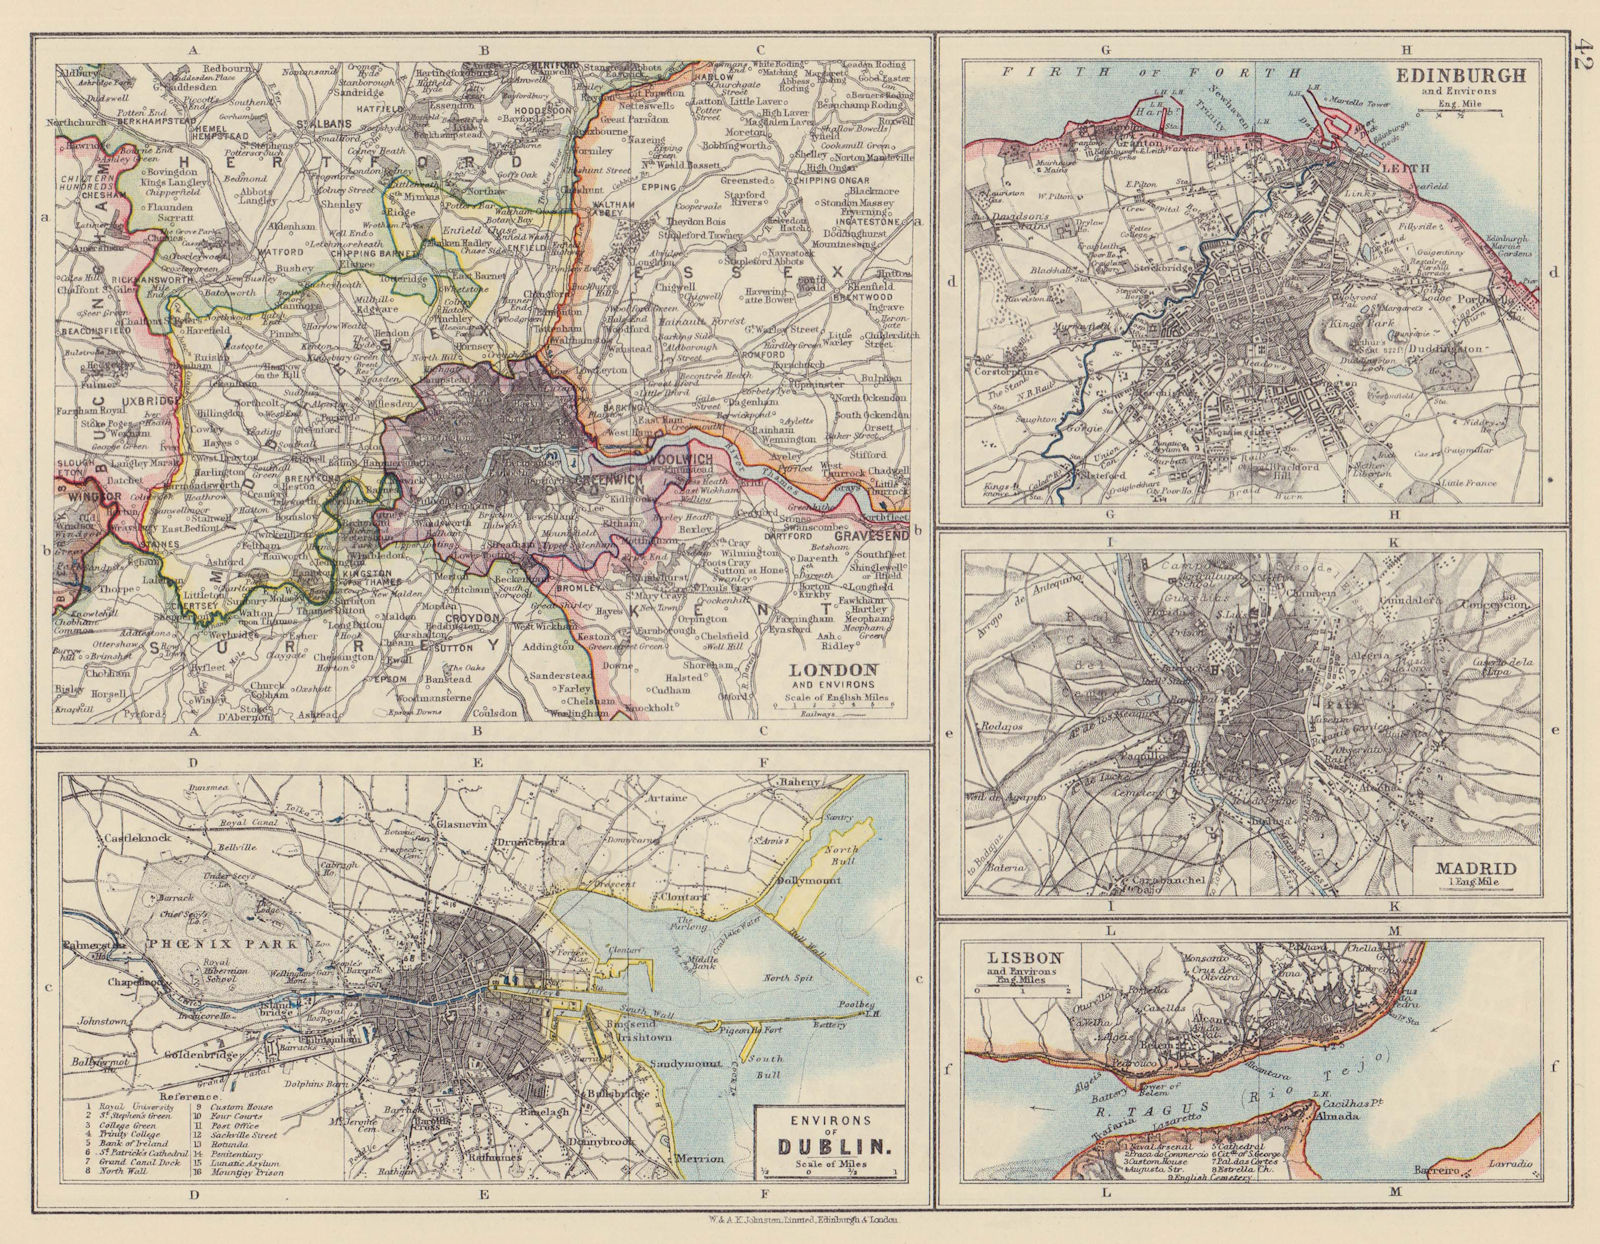 Associate Product EUROPEAN CITIES. London Edinburgh Madrid Lisbon Dublin. JOHNSTON 1910 old map